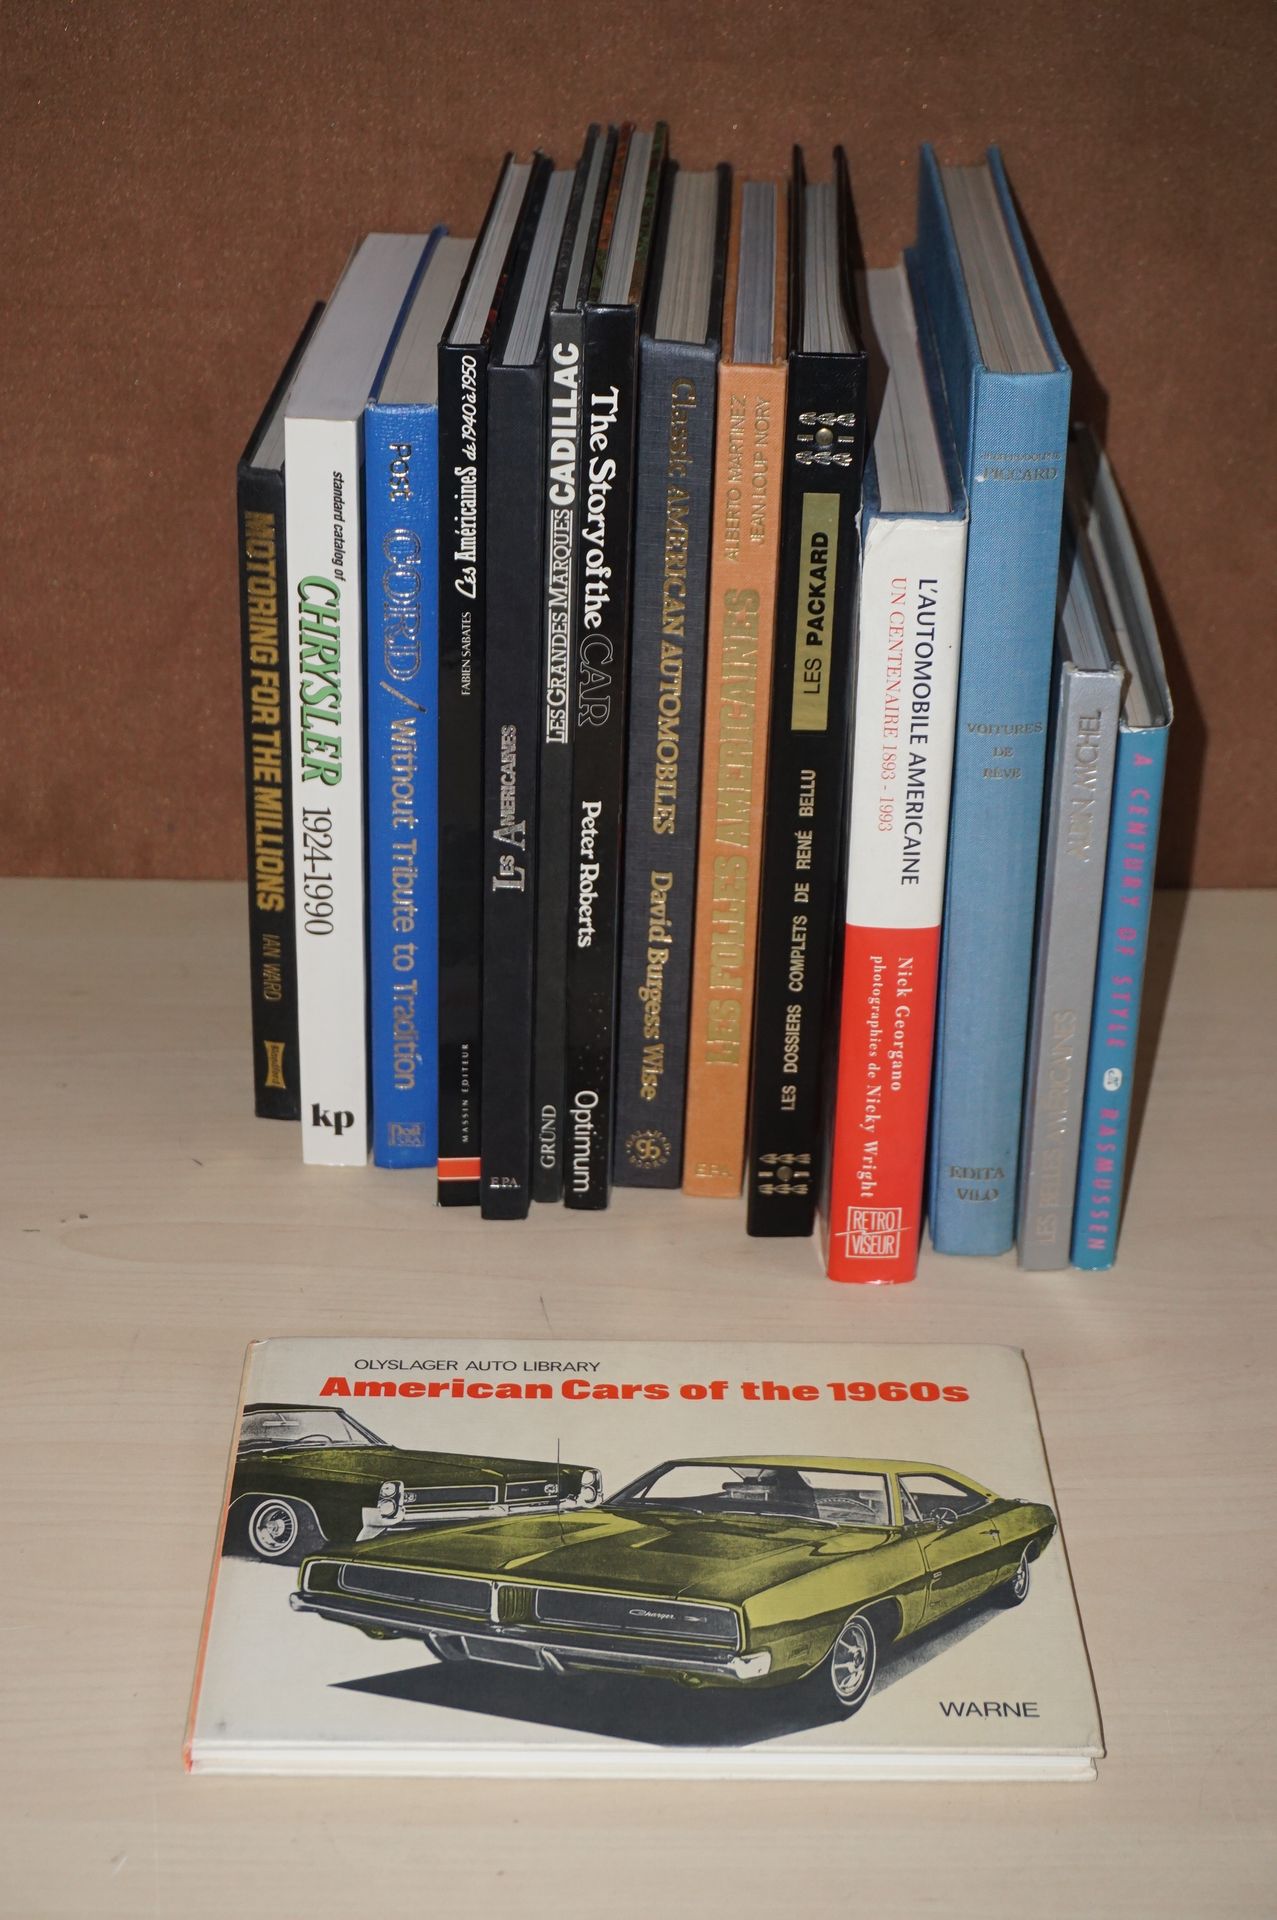 Null Lot de 15 livres sur les voitures americaines 
- American cars of the 1960s&hellip;